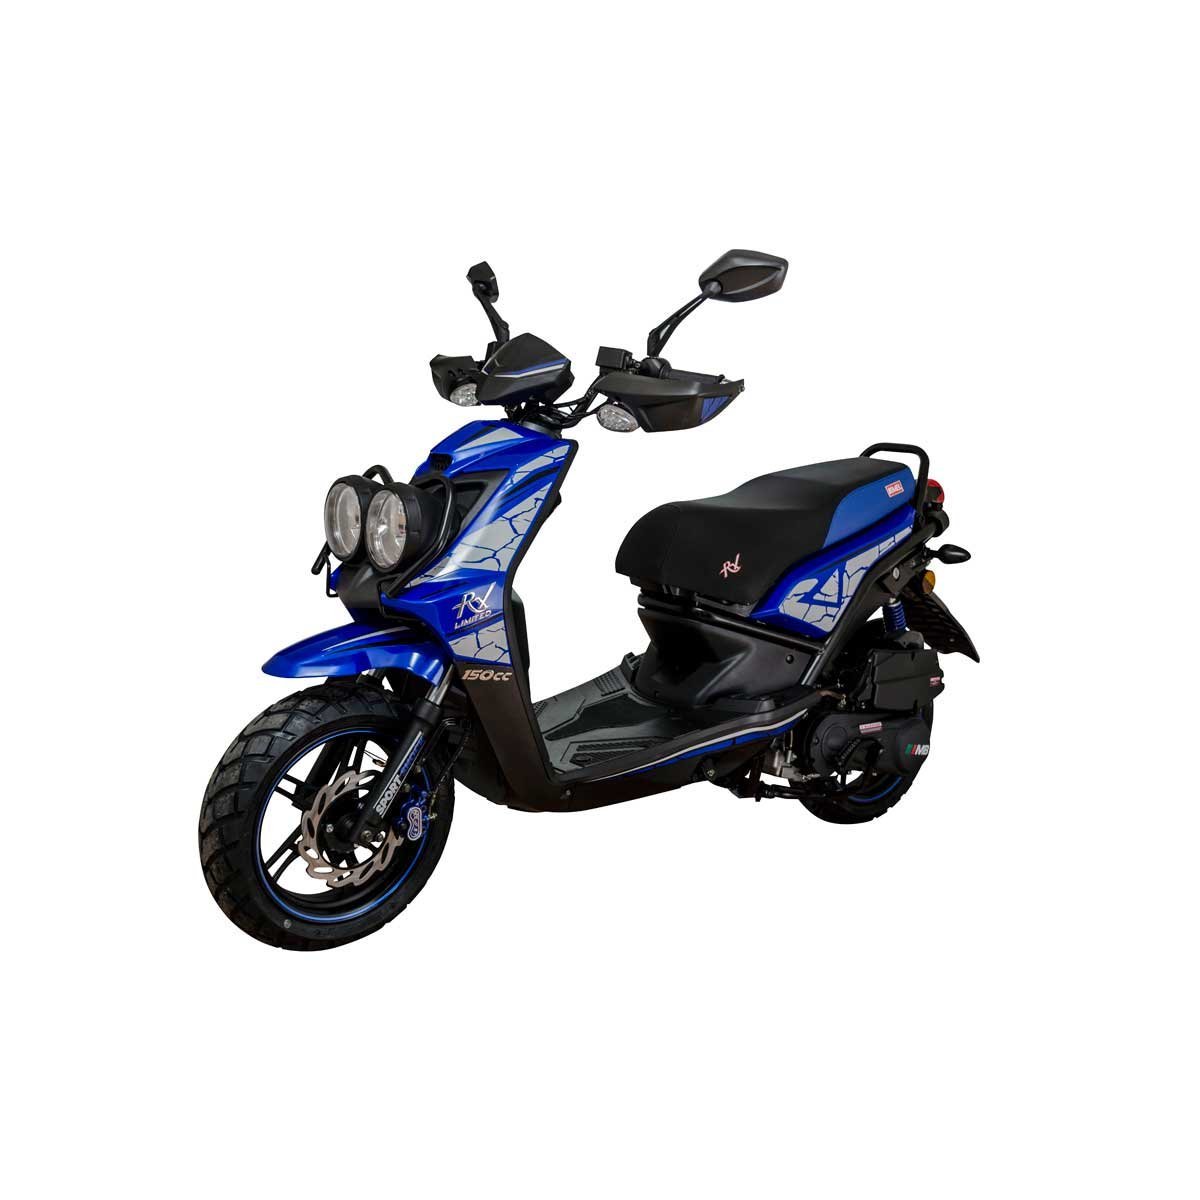 Motocicleta Rx Limited Azul 150Cc 2020 Mb